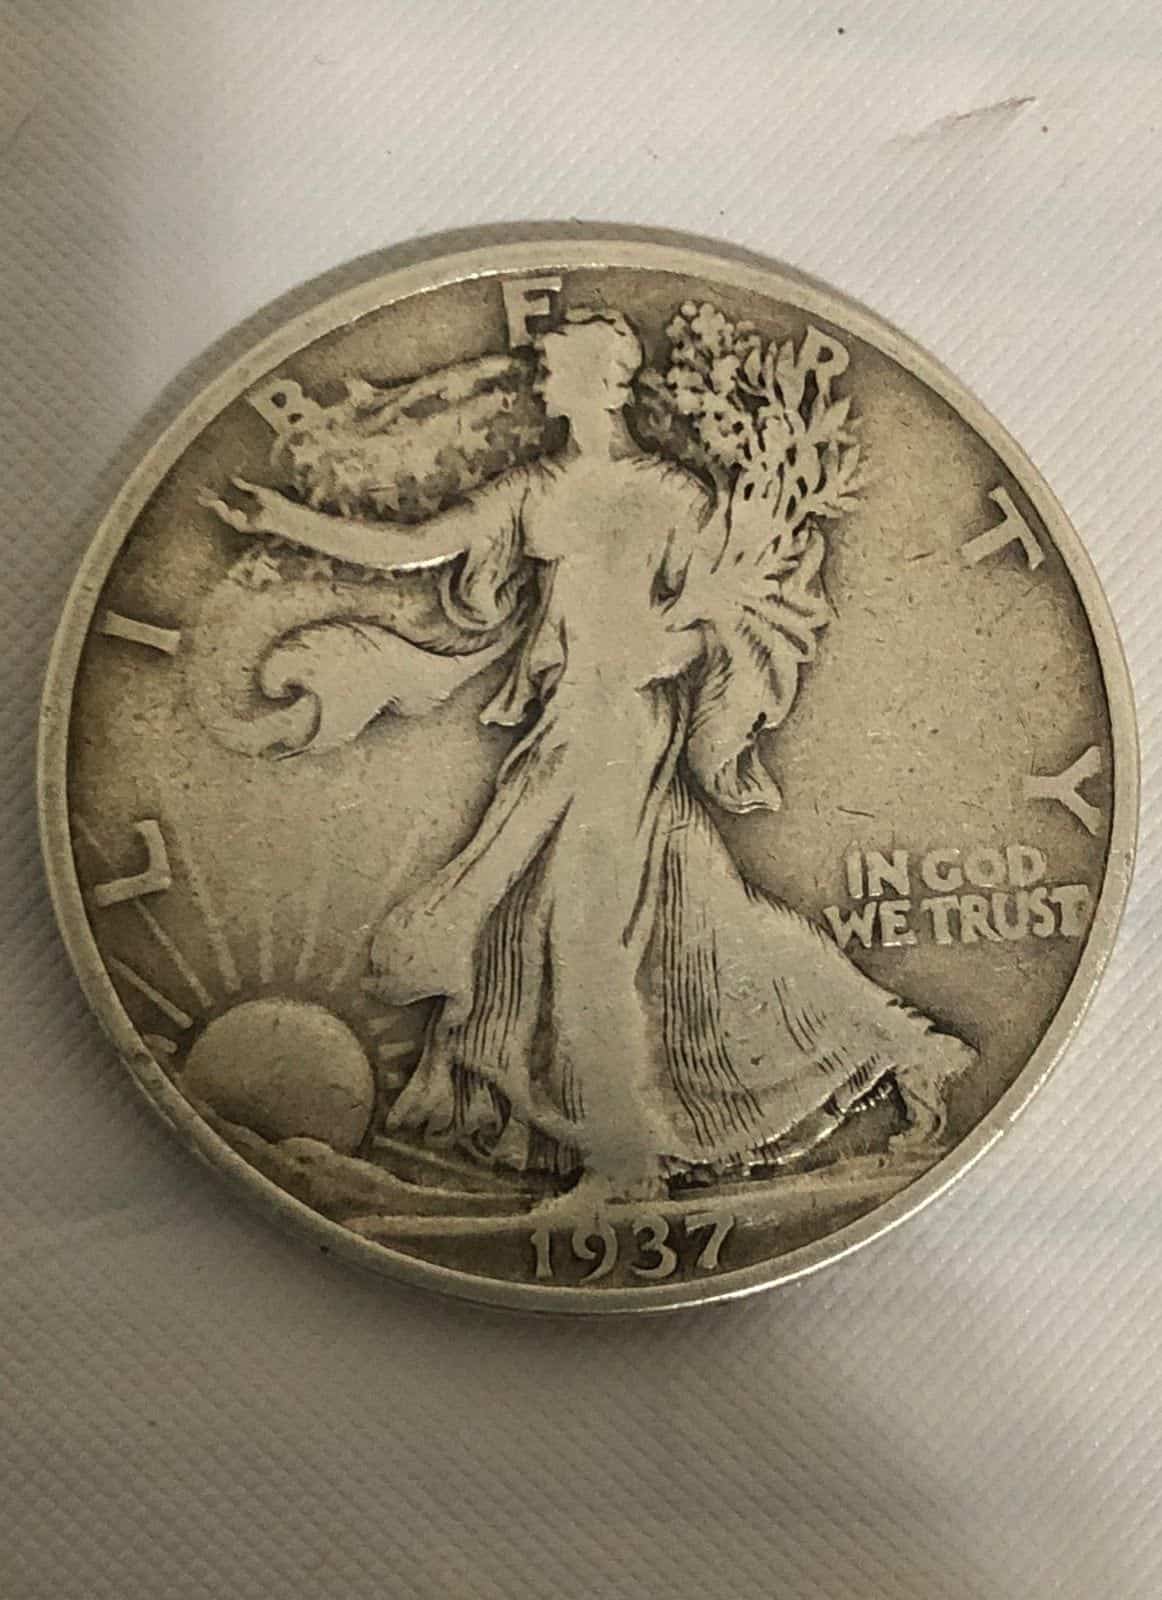 Mints that Struck the 1937 Half Dollar